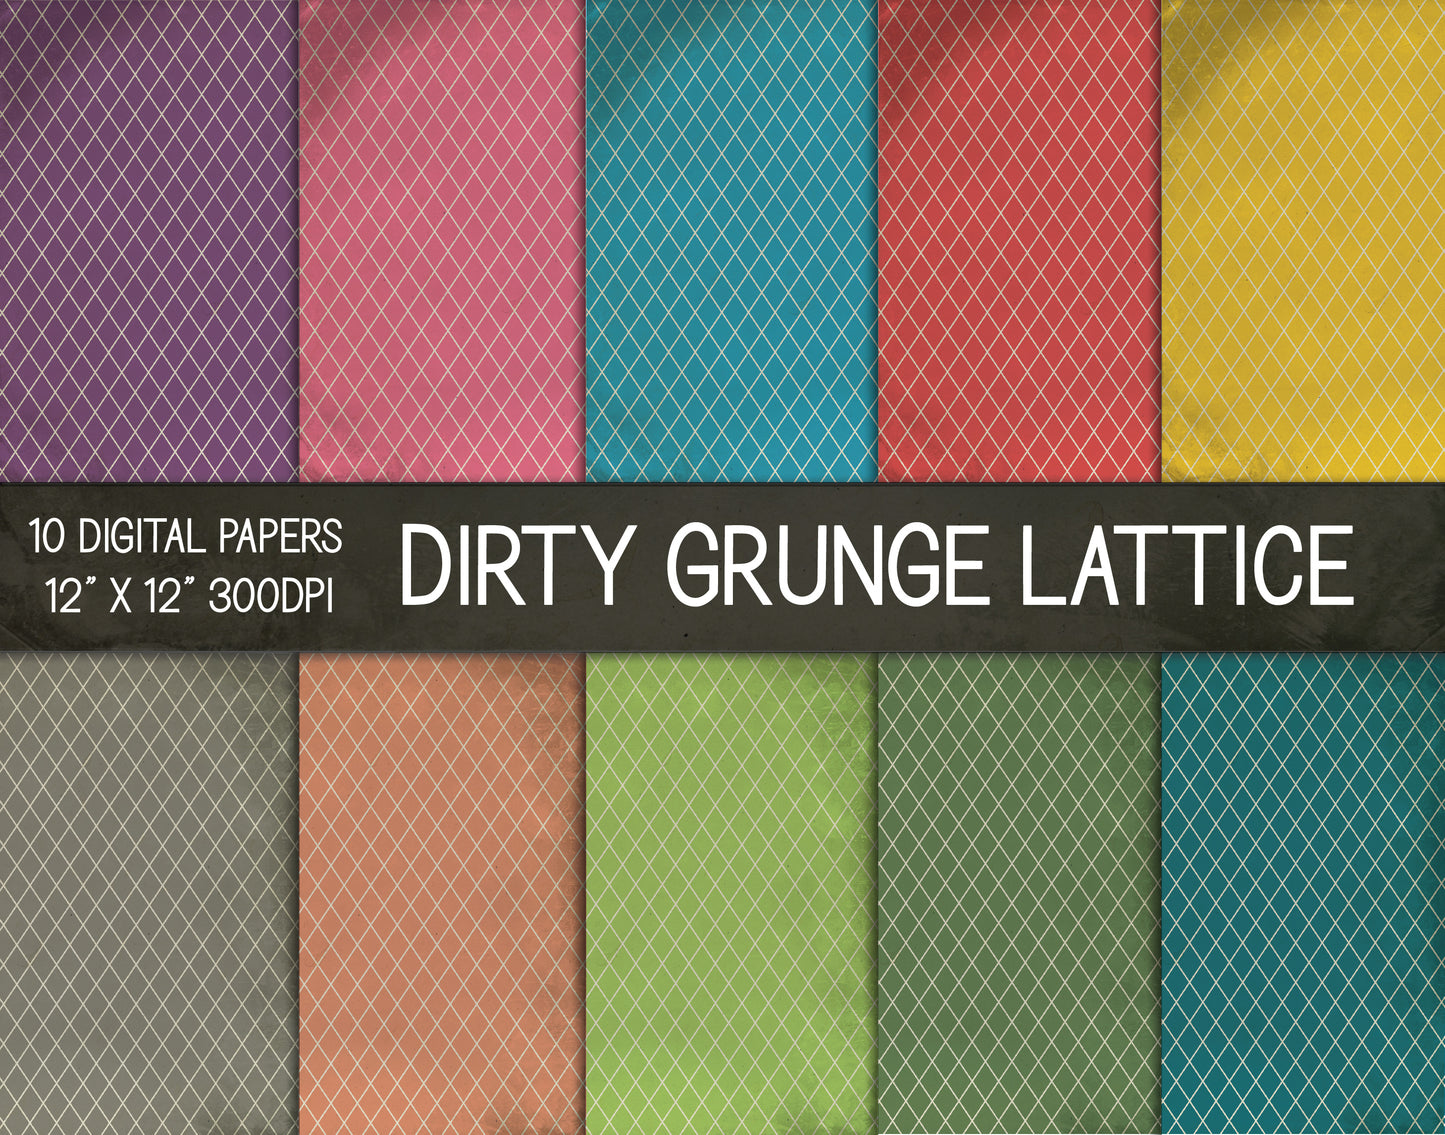 Dirty Grunge Lattice Digital Papers, Grunge Texture Paper